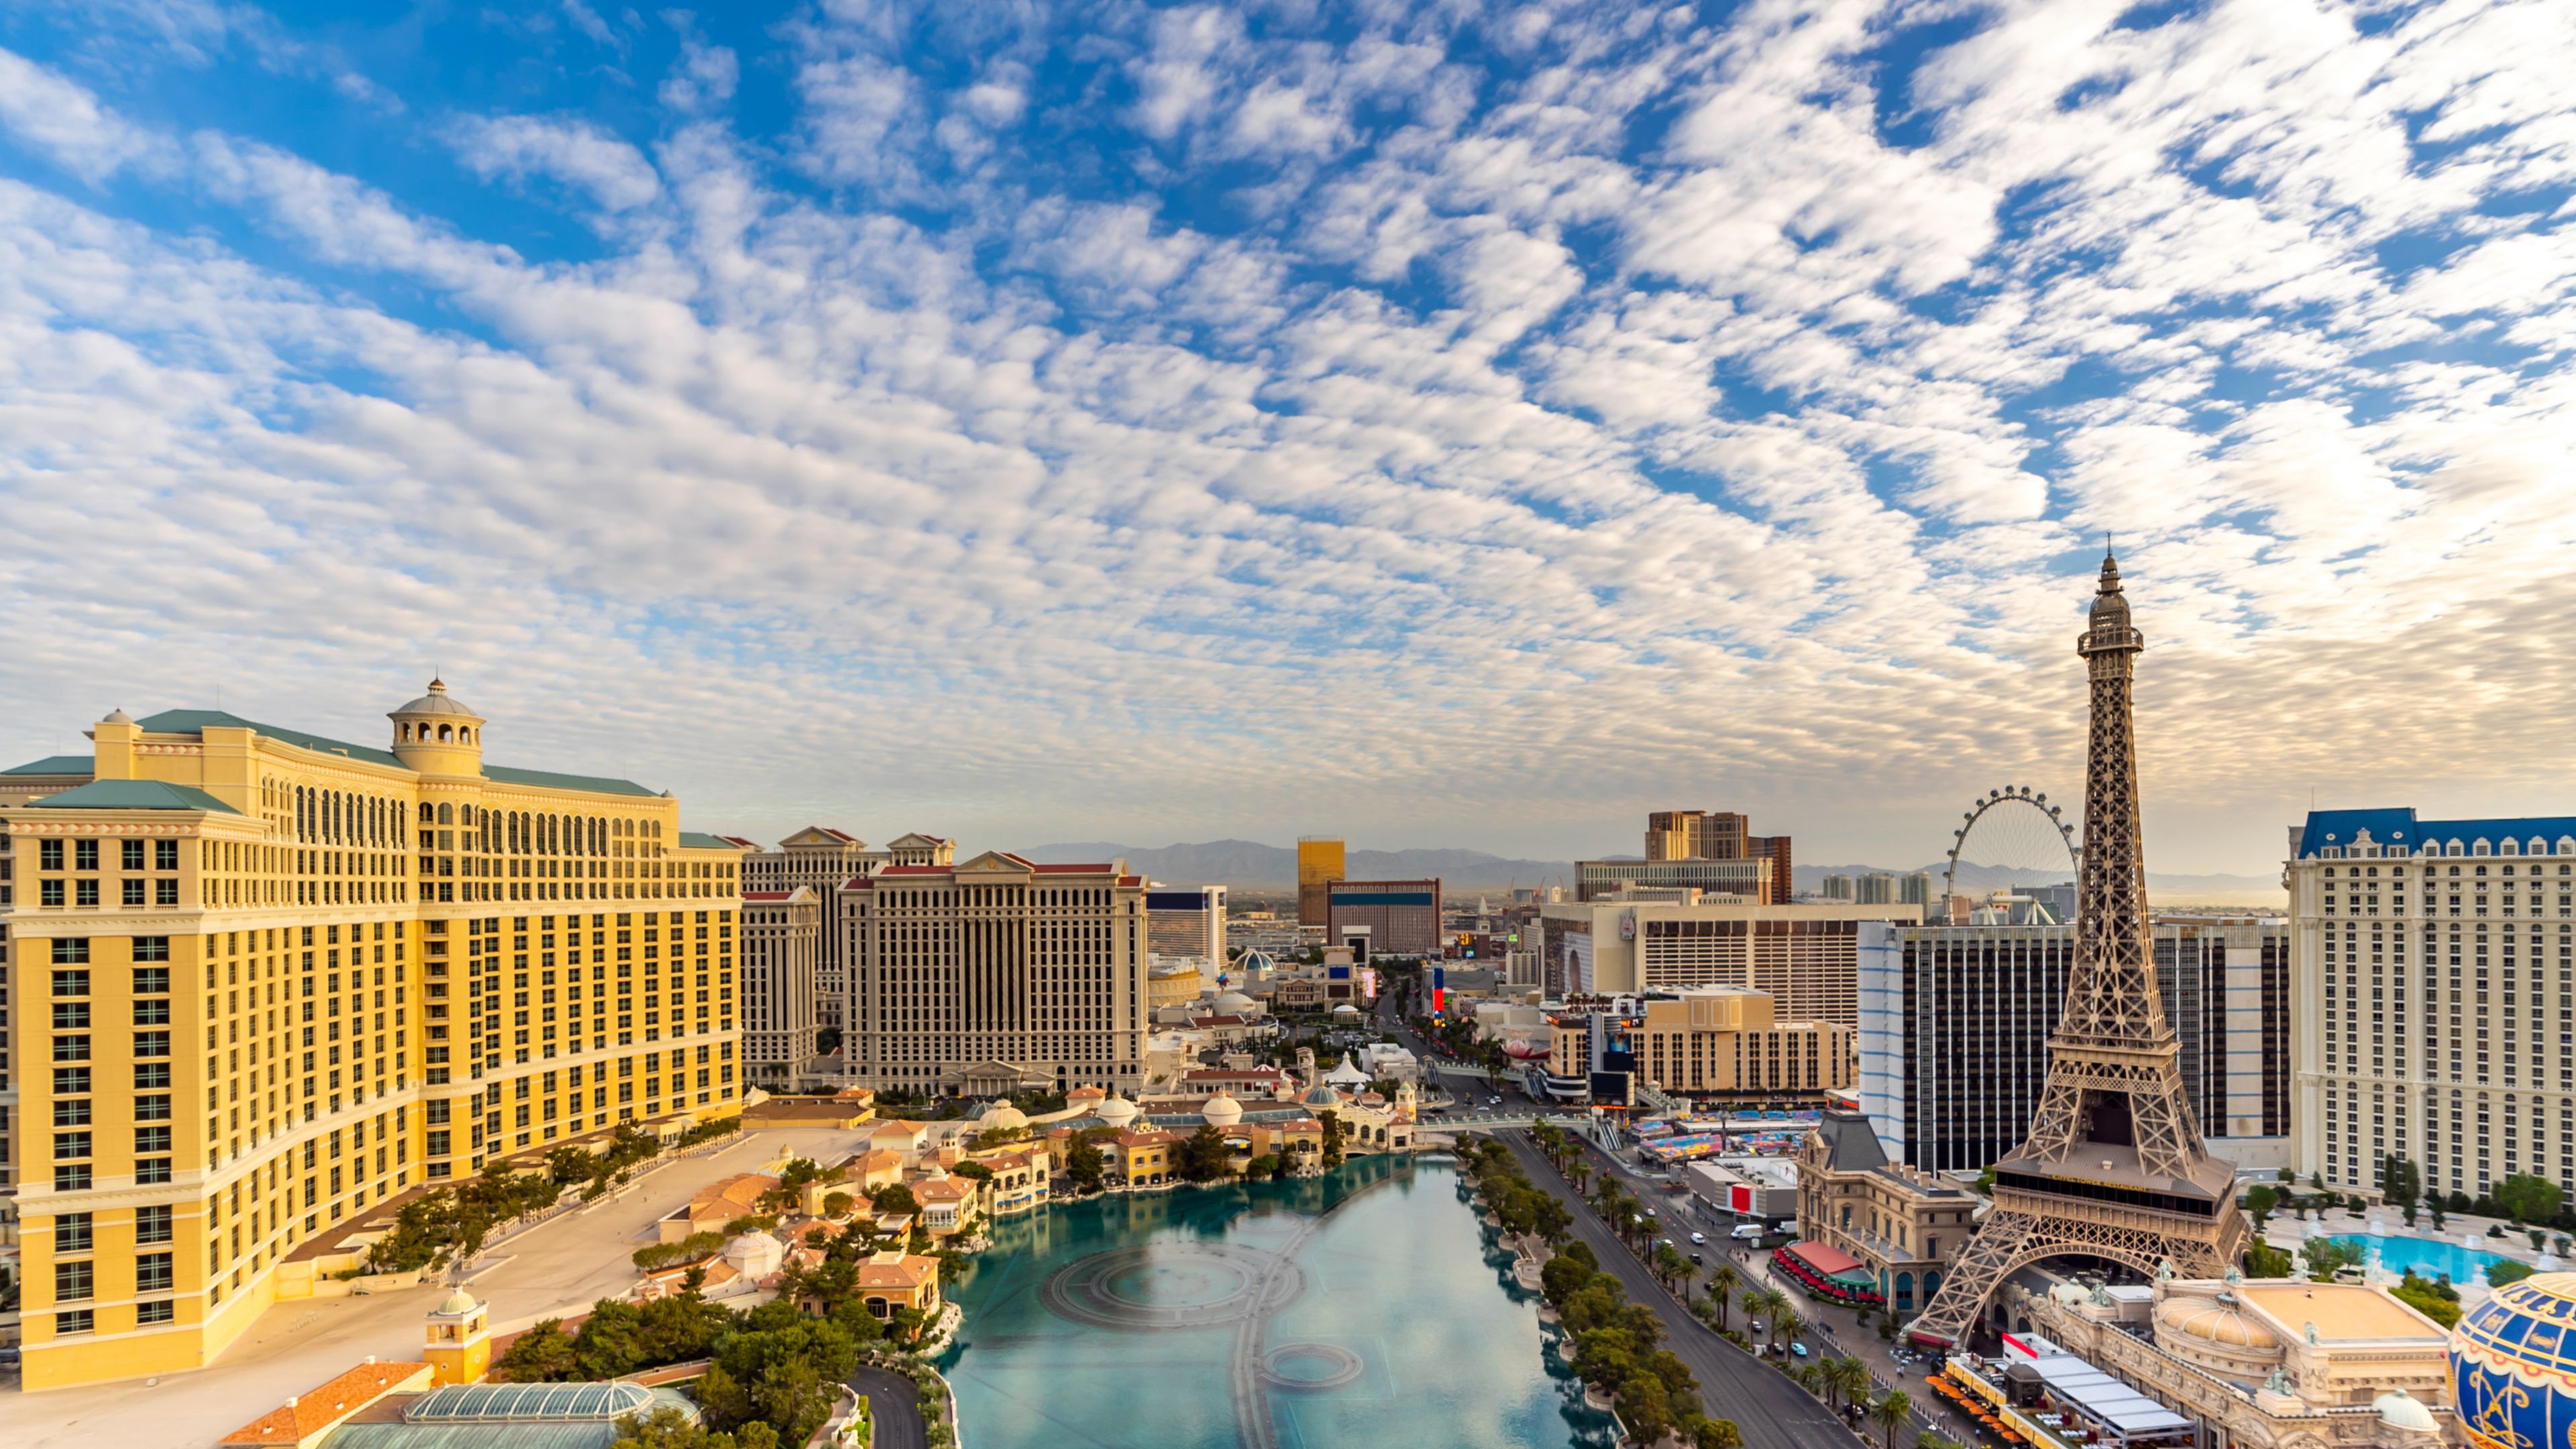 5 BEST Places to Visit in Las Vegas